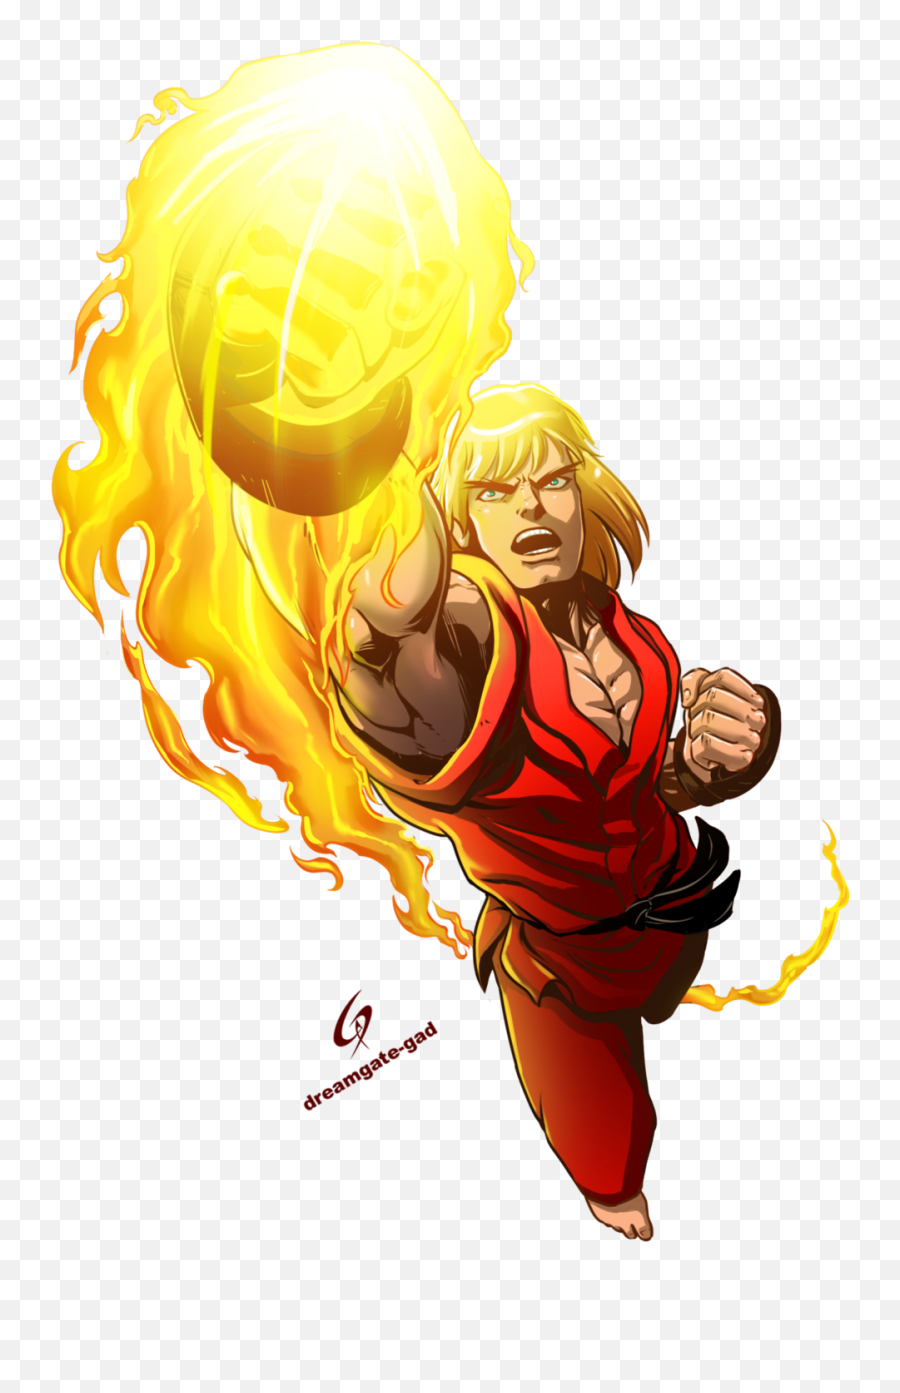 Ken Street Fighter Png 6 Image - Ken Street Fighter Shoryuken,Fighter Png